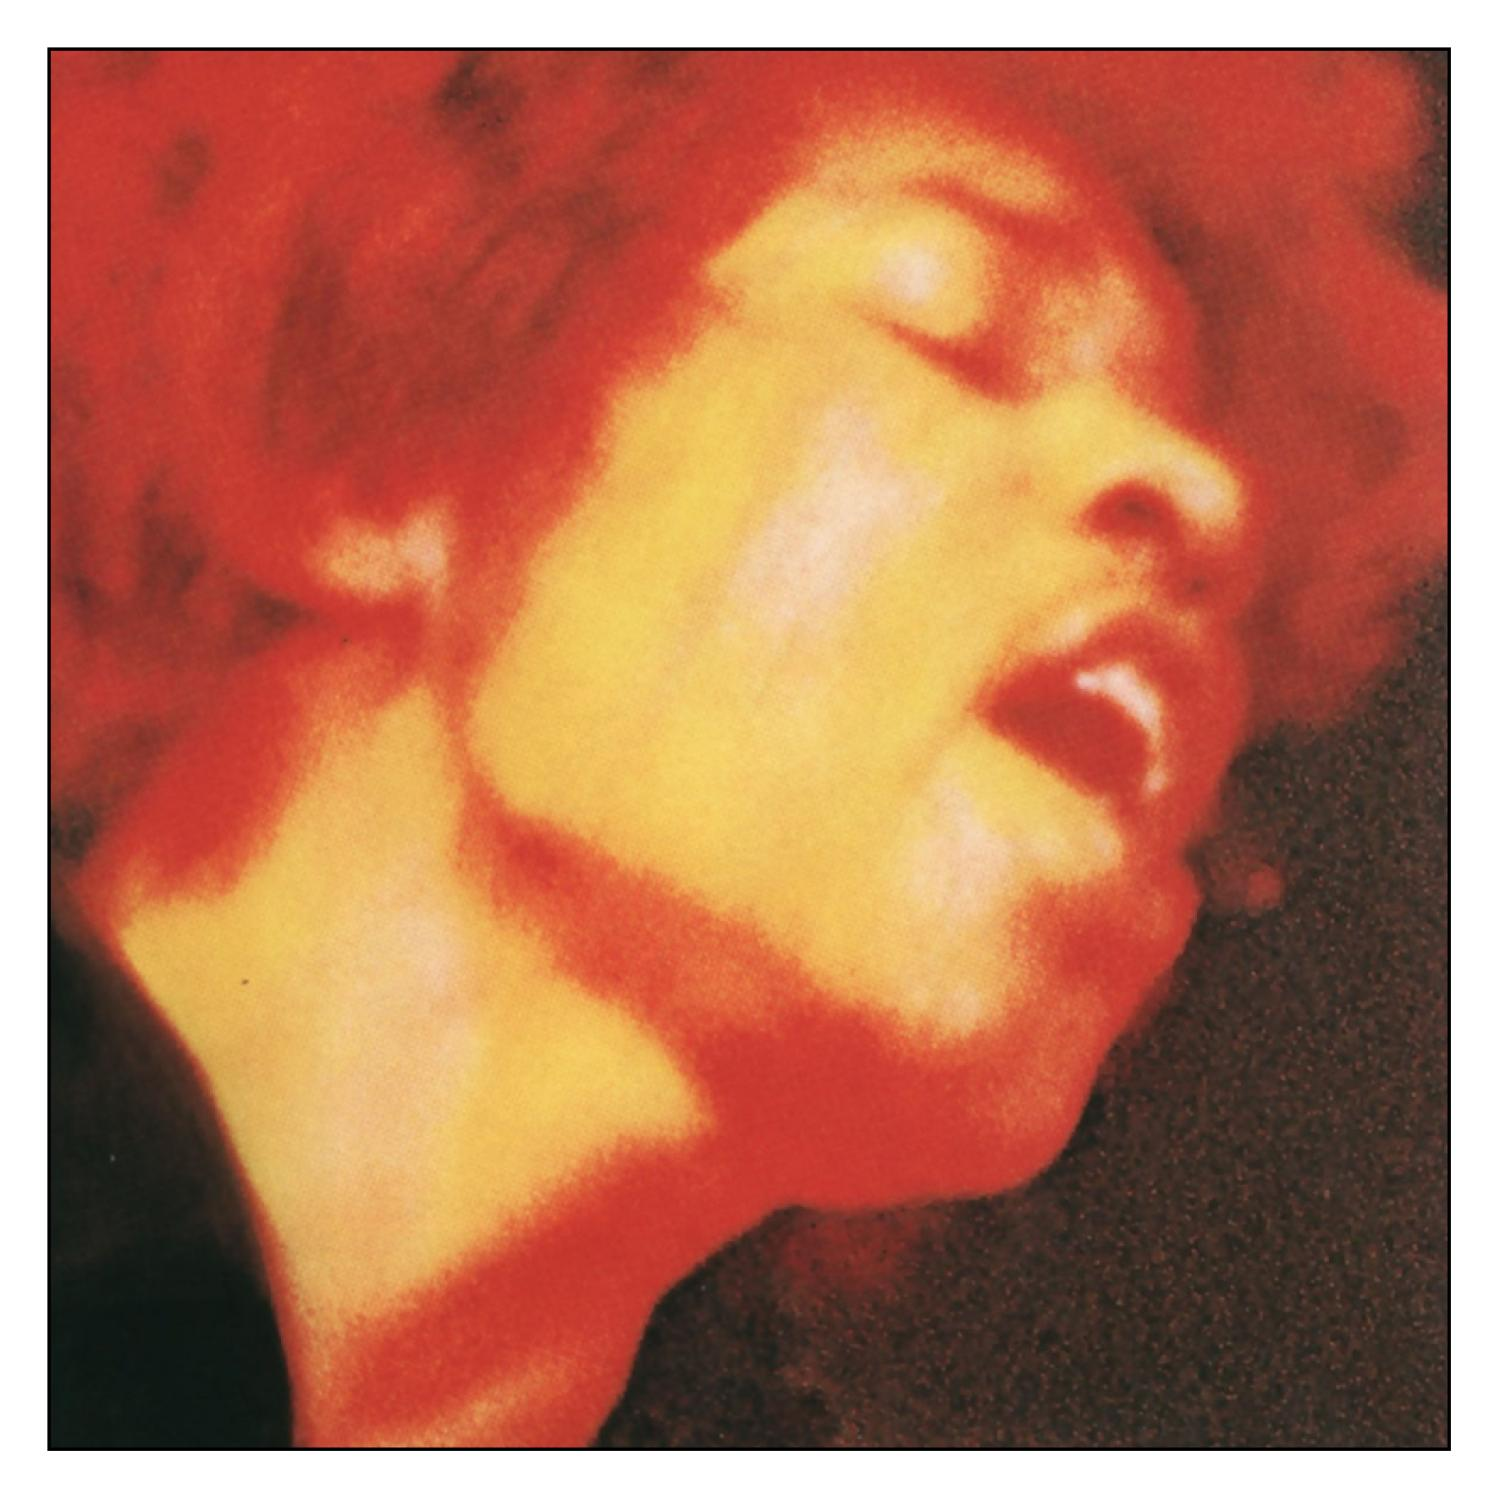 Jimi Hendrix Electric - Ladyland - (CD)